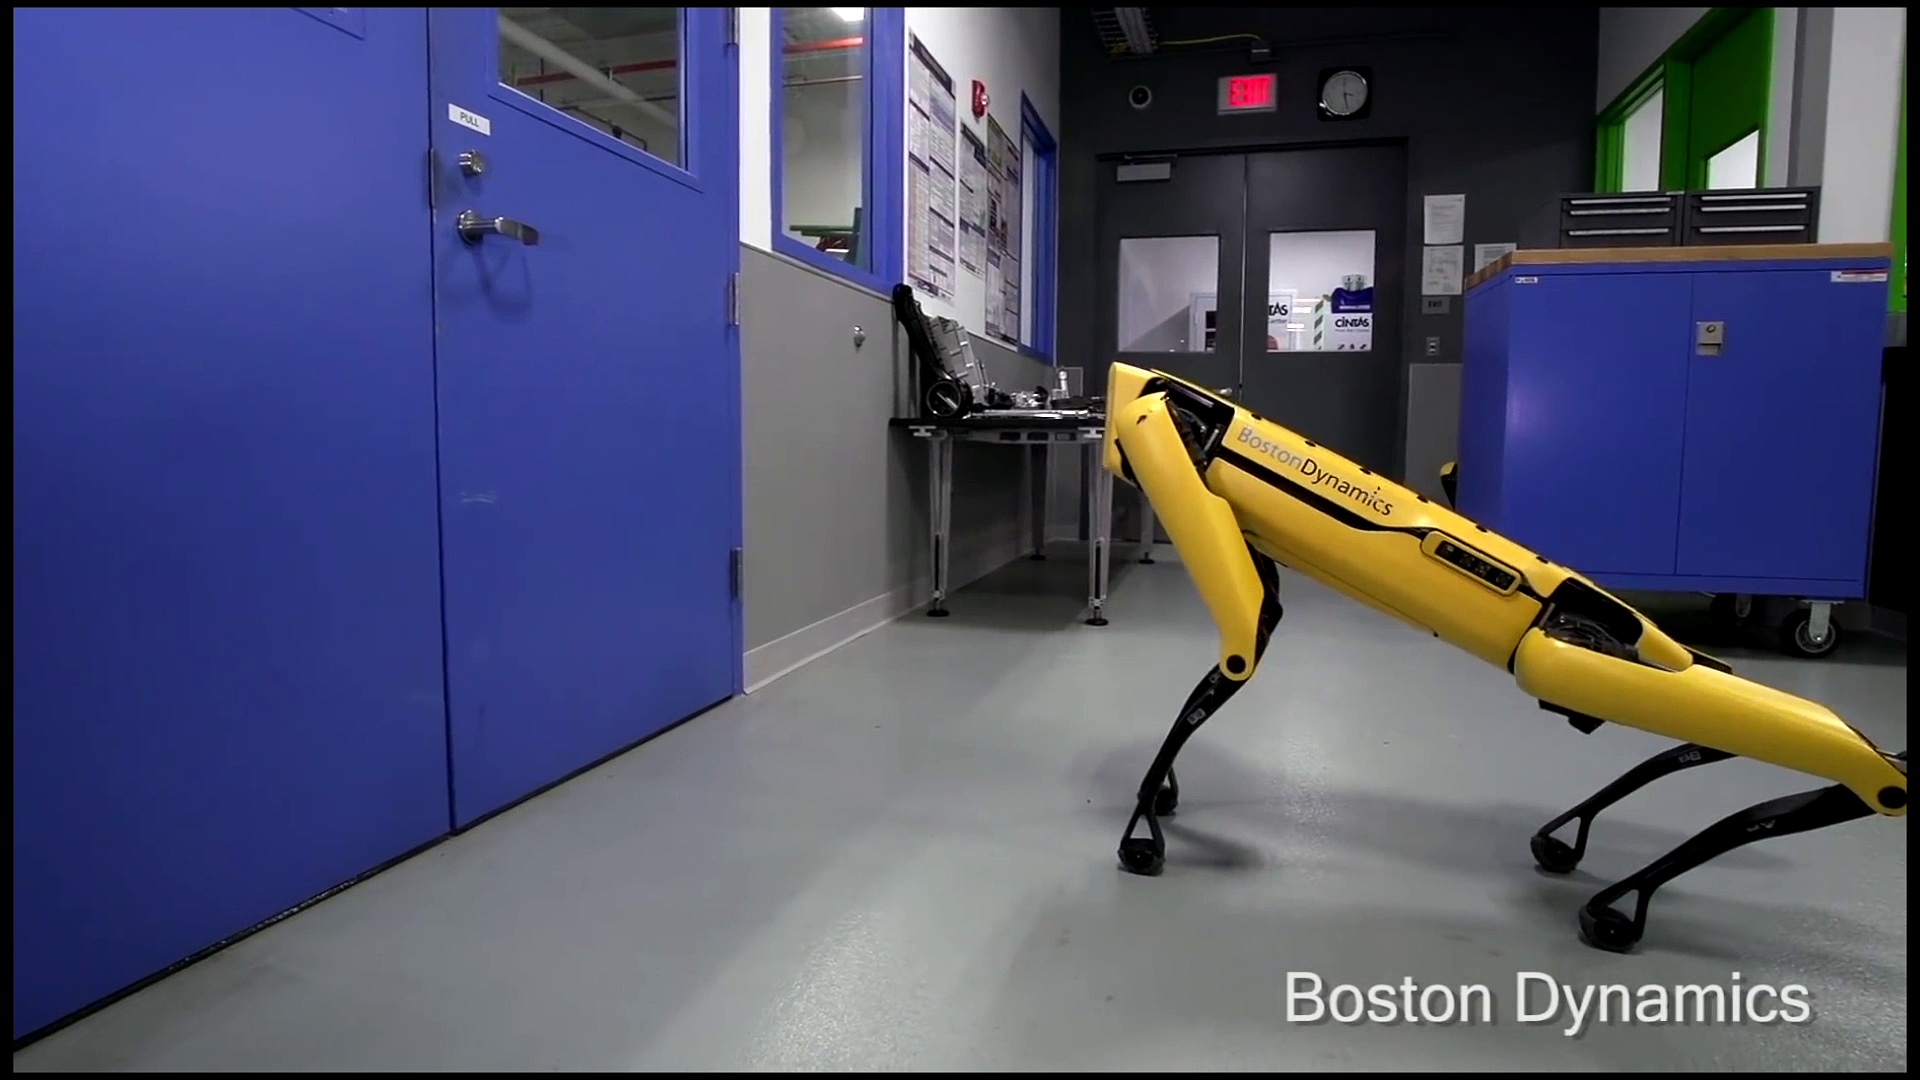 Boston Dynamics 2018 : le robot SpotMini ouvre les portes tout seul